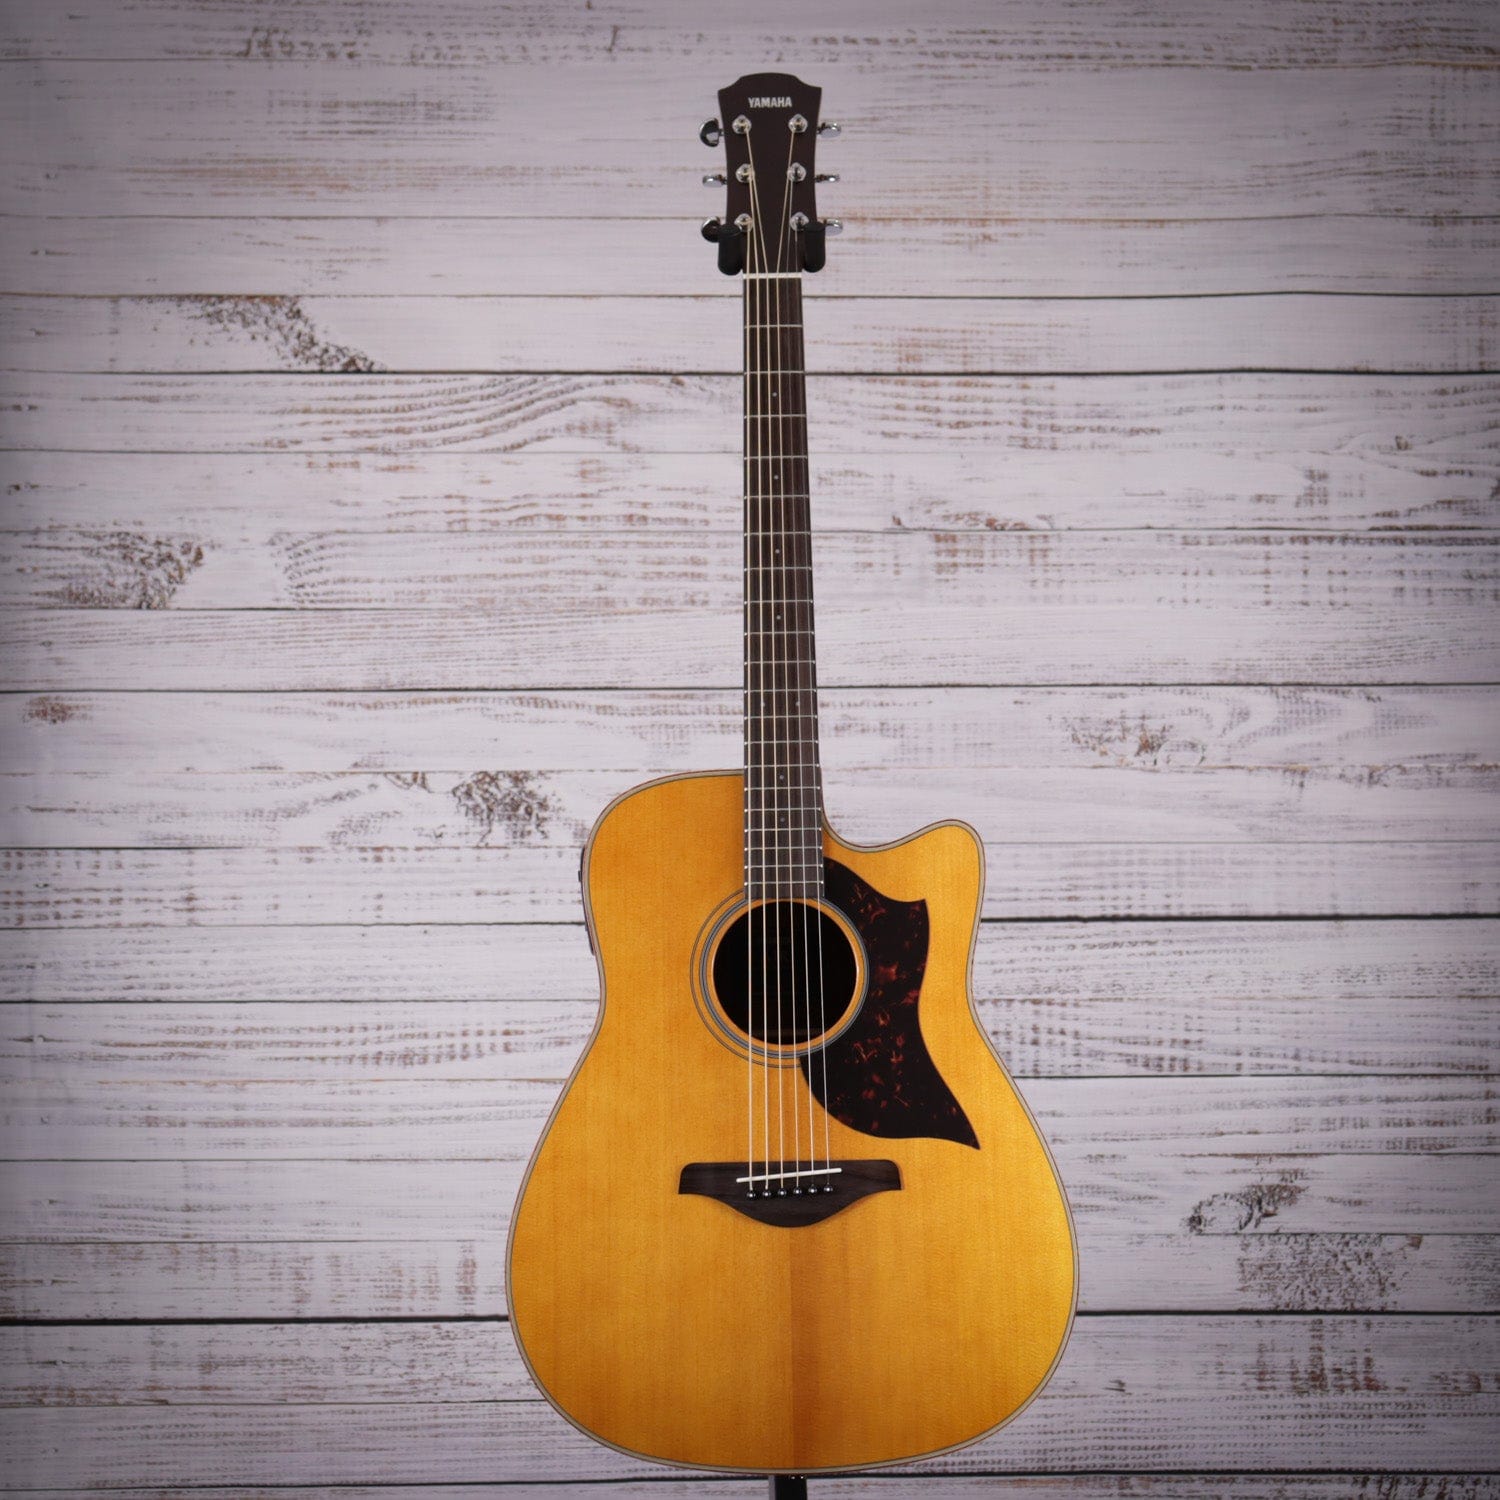 Yamaha A1RVN Folk Cutaway Acoustic Electric Guitar - Rosewood - Vintage Natural